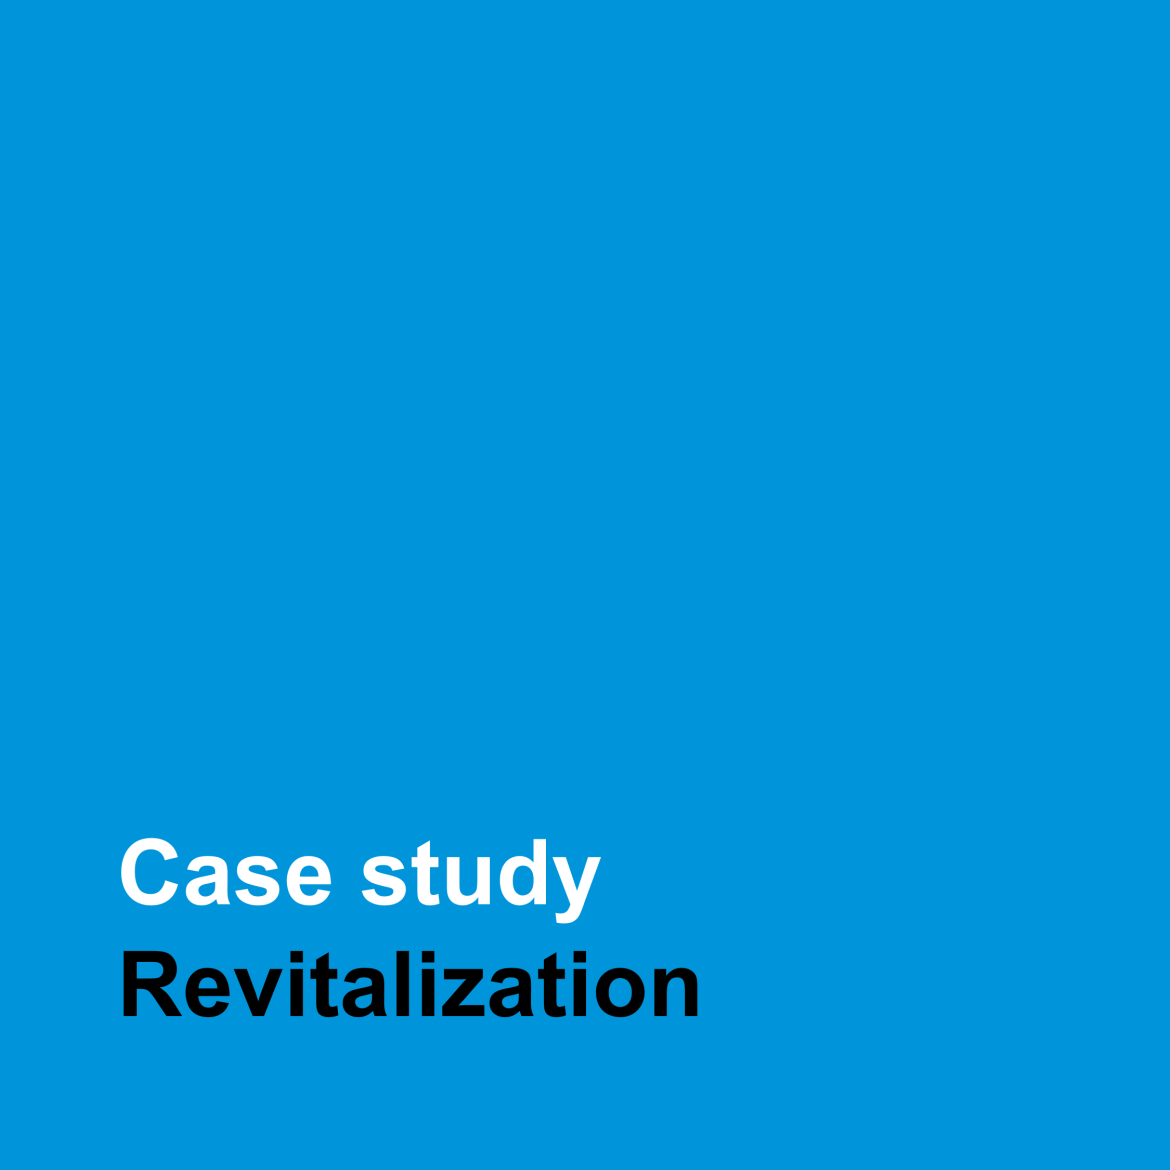 Case study about revitalization